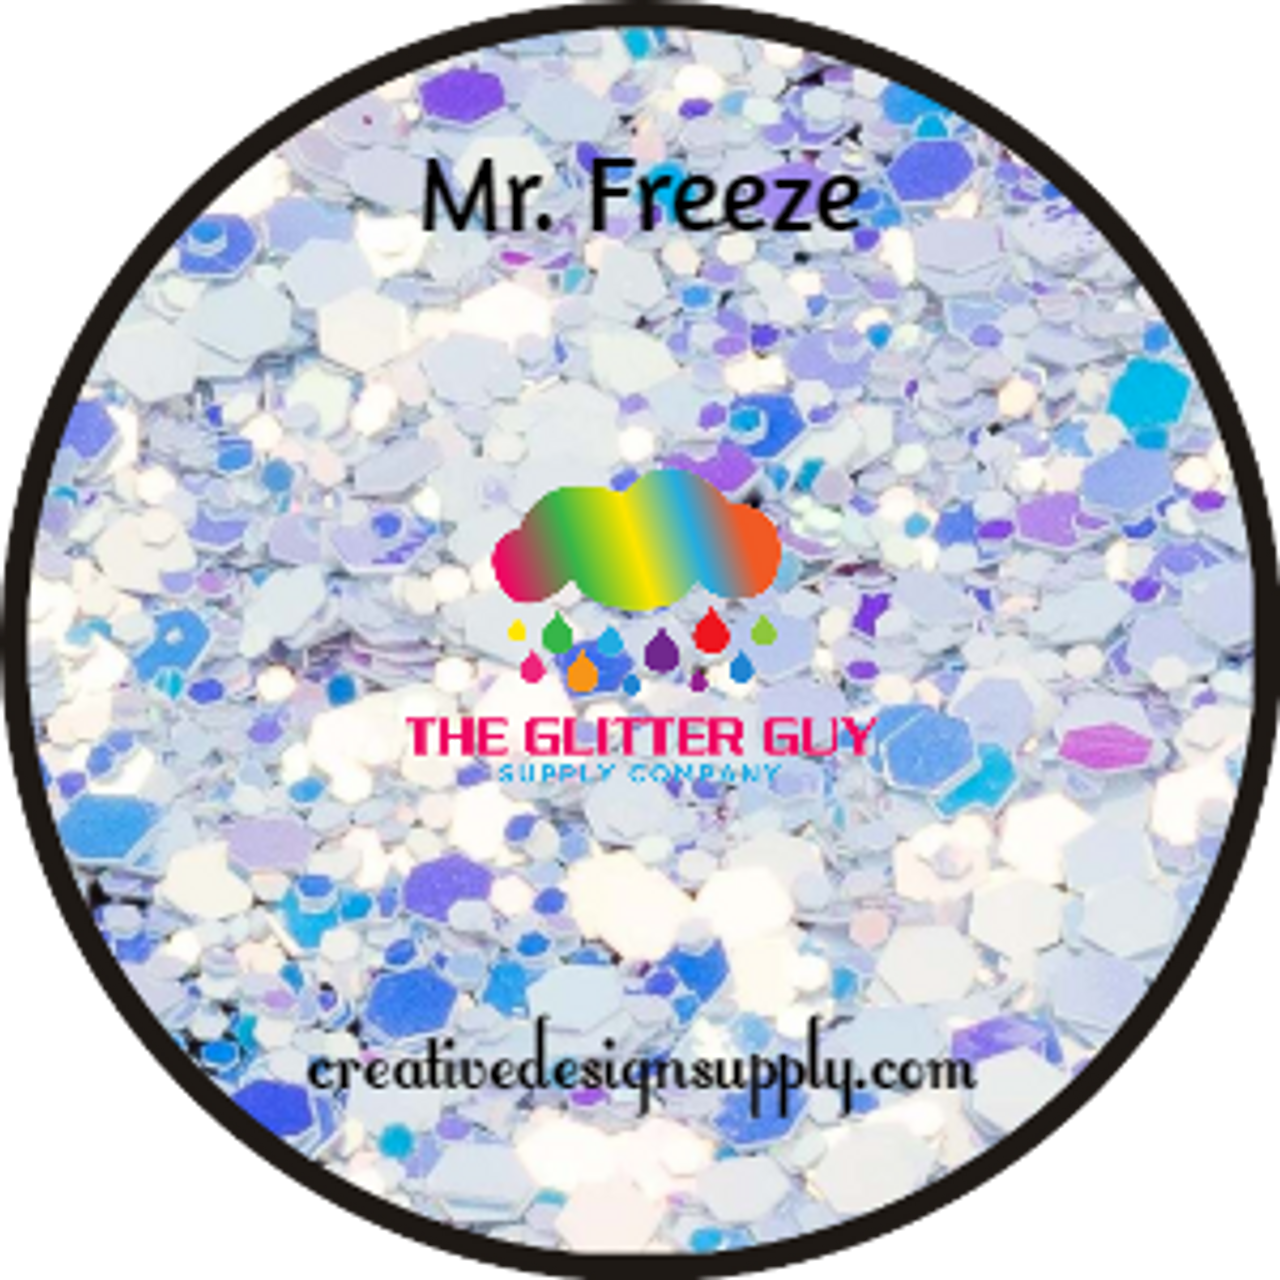 The Glitter Guy | Mr. Freeze